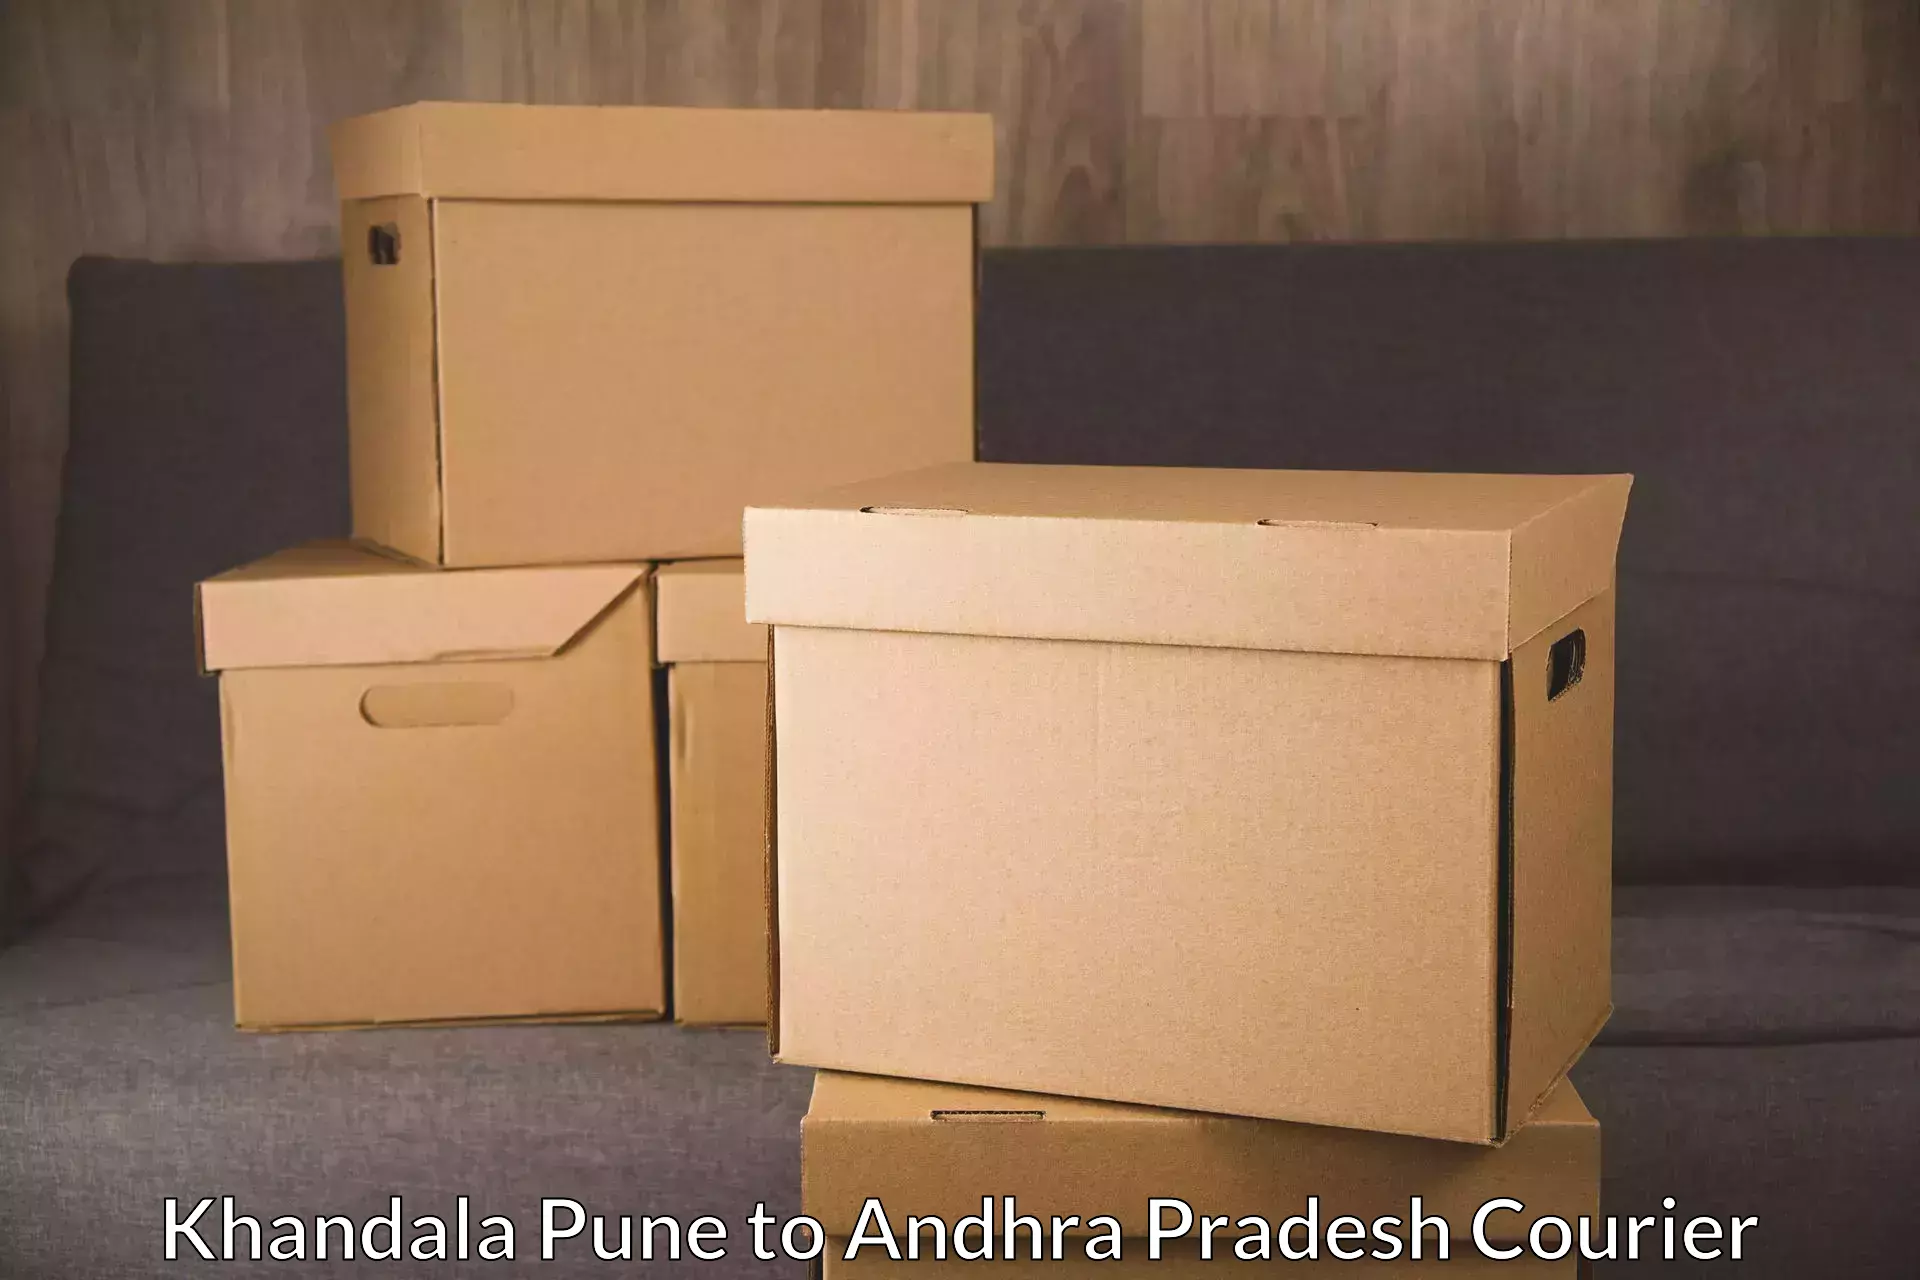 Courier service comparison Khandala Pune to Pedabayalu